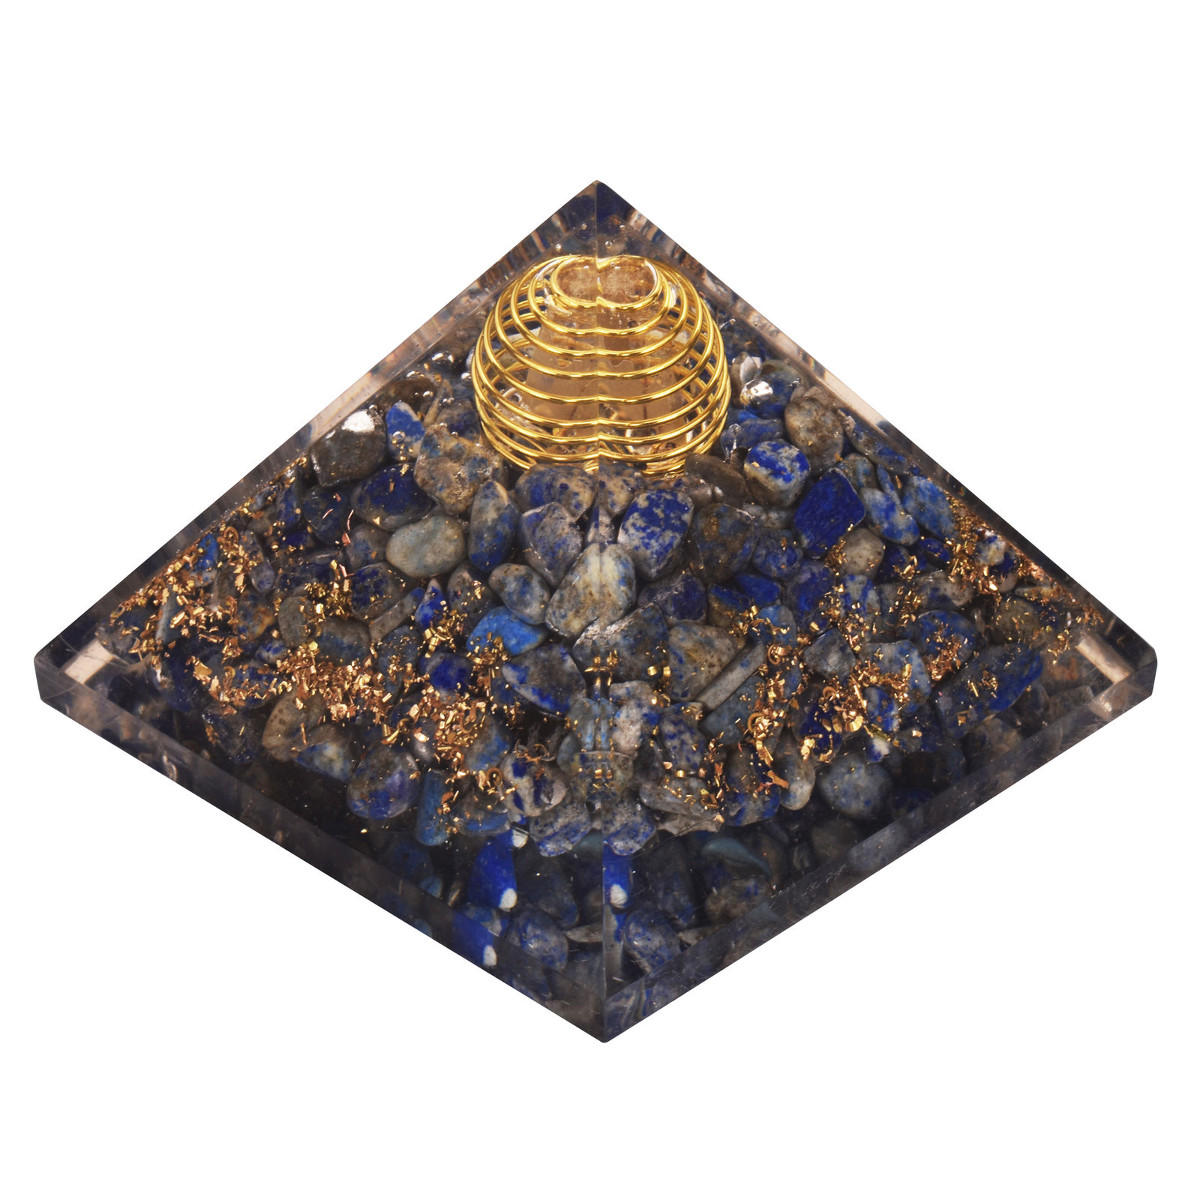 Pyramid Crystal Gemstone Meditation Yoga Energy Healing Stone Home Desk Decorations